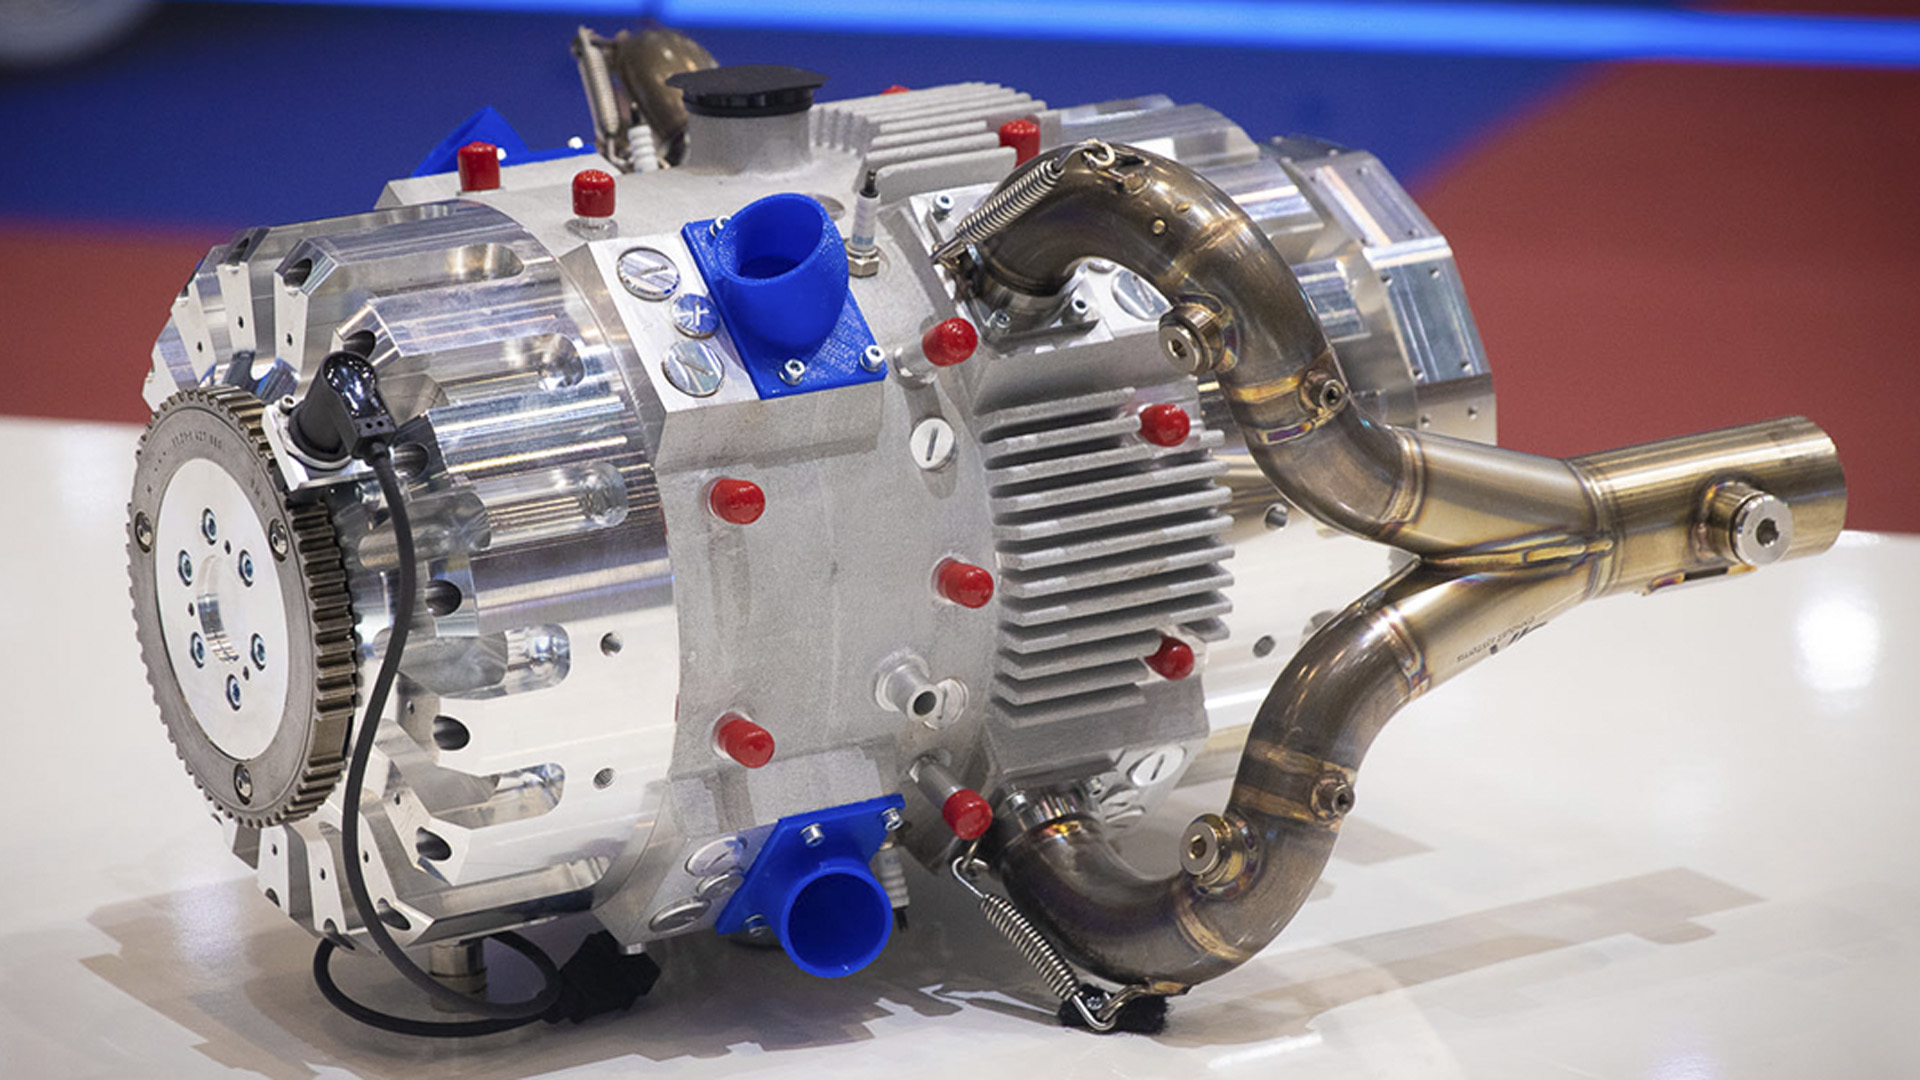 Company Builds Powerful 500cc ‘One-Stroke’ Engine, Immediately Installs It in a Miata